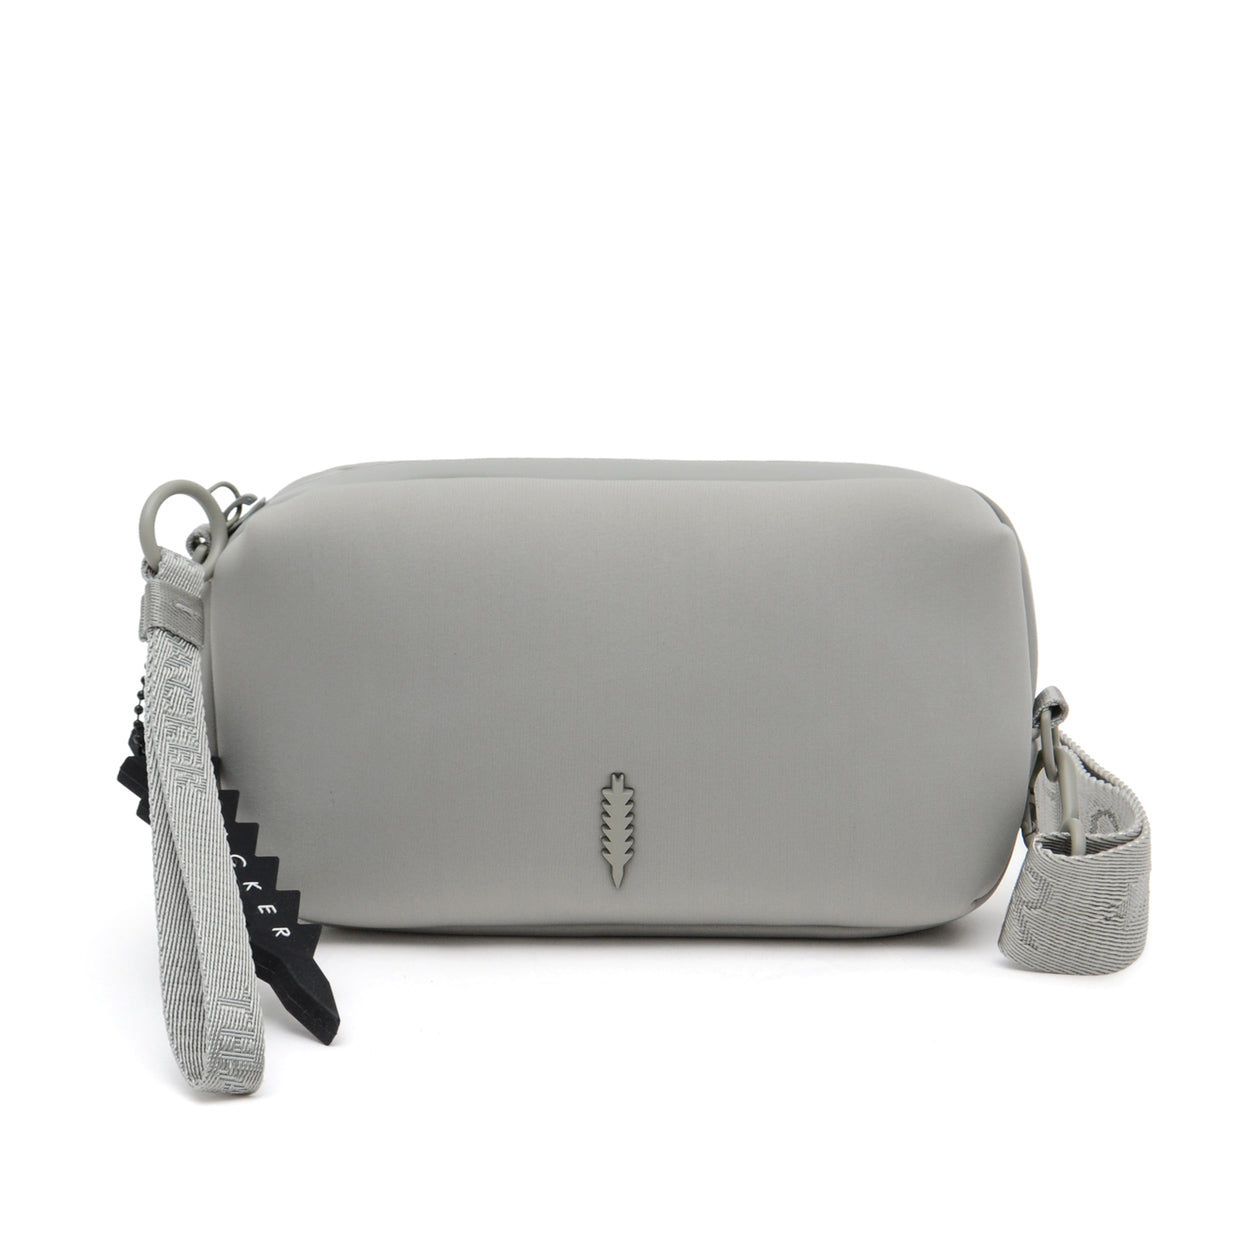 Cocoon 3 in 1 Phone Bag | Light Grey Neoprene